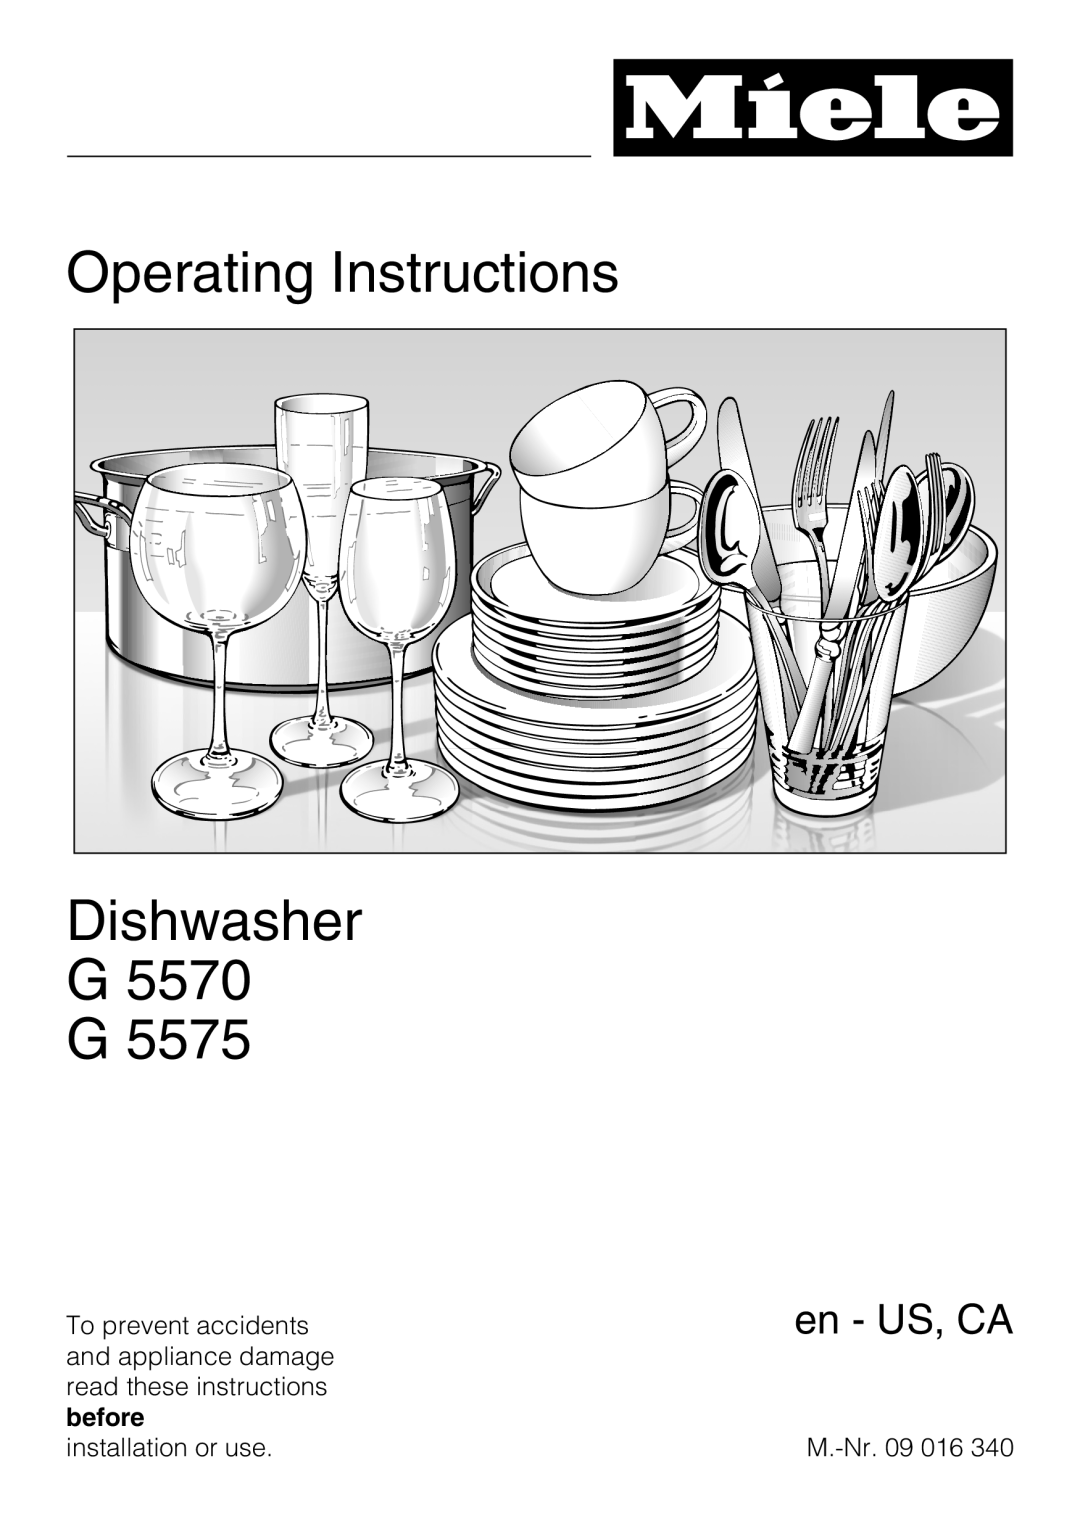 Miele G 5575, G 5570 operating instructions Operating Instructions Dishwasher G5570 G, en - US, CA 